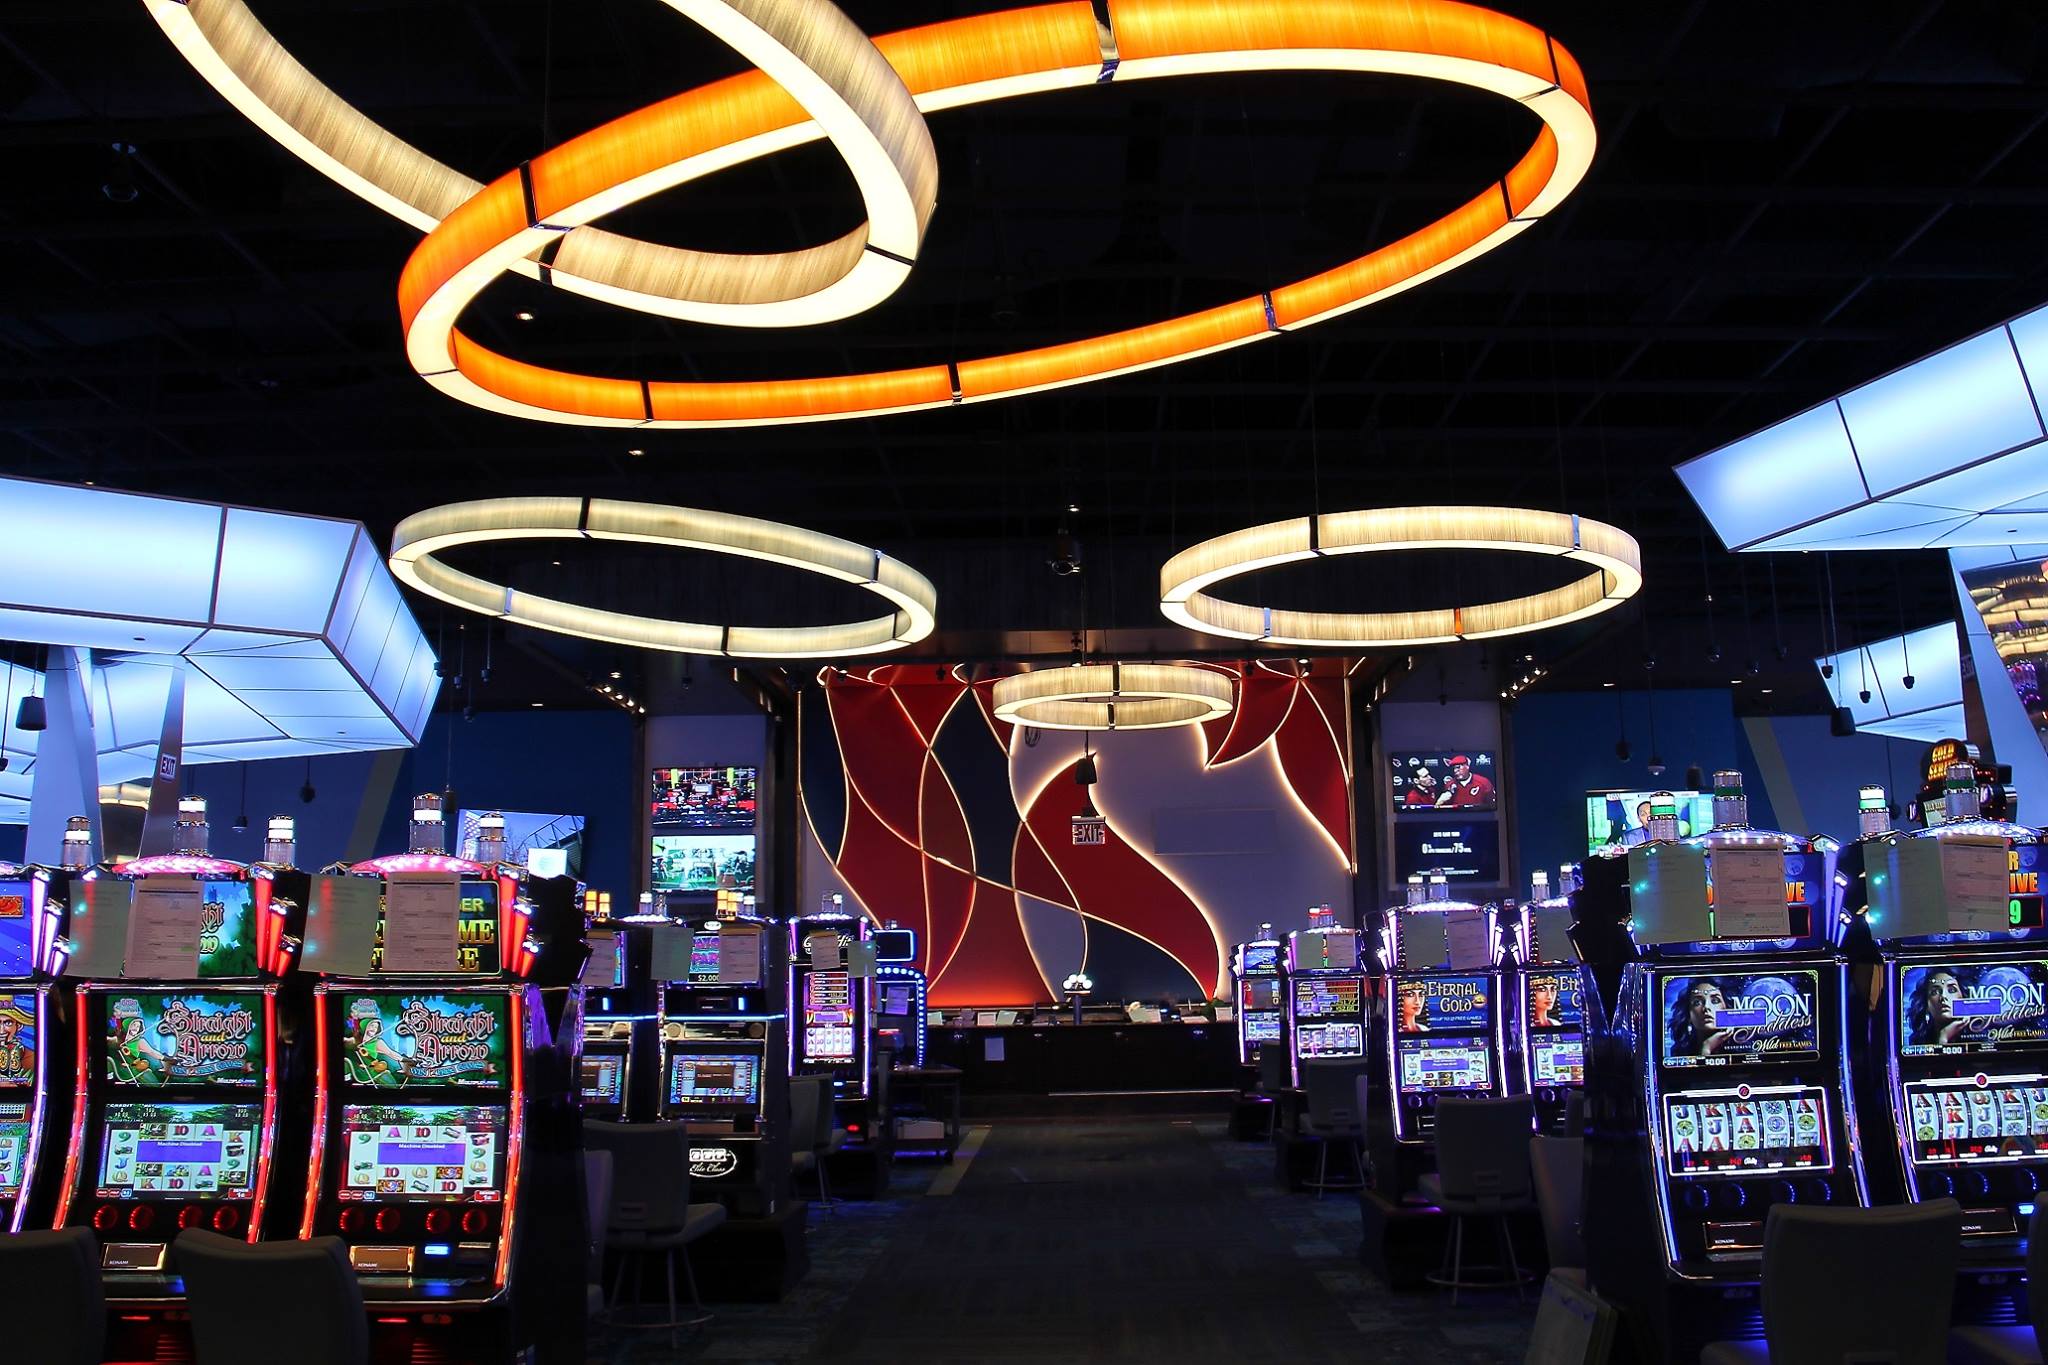 Tohono O'odham Nation set to open new casino on December 20